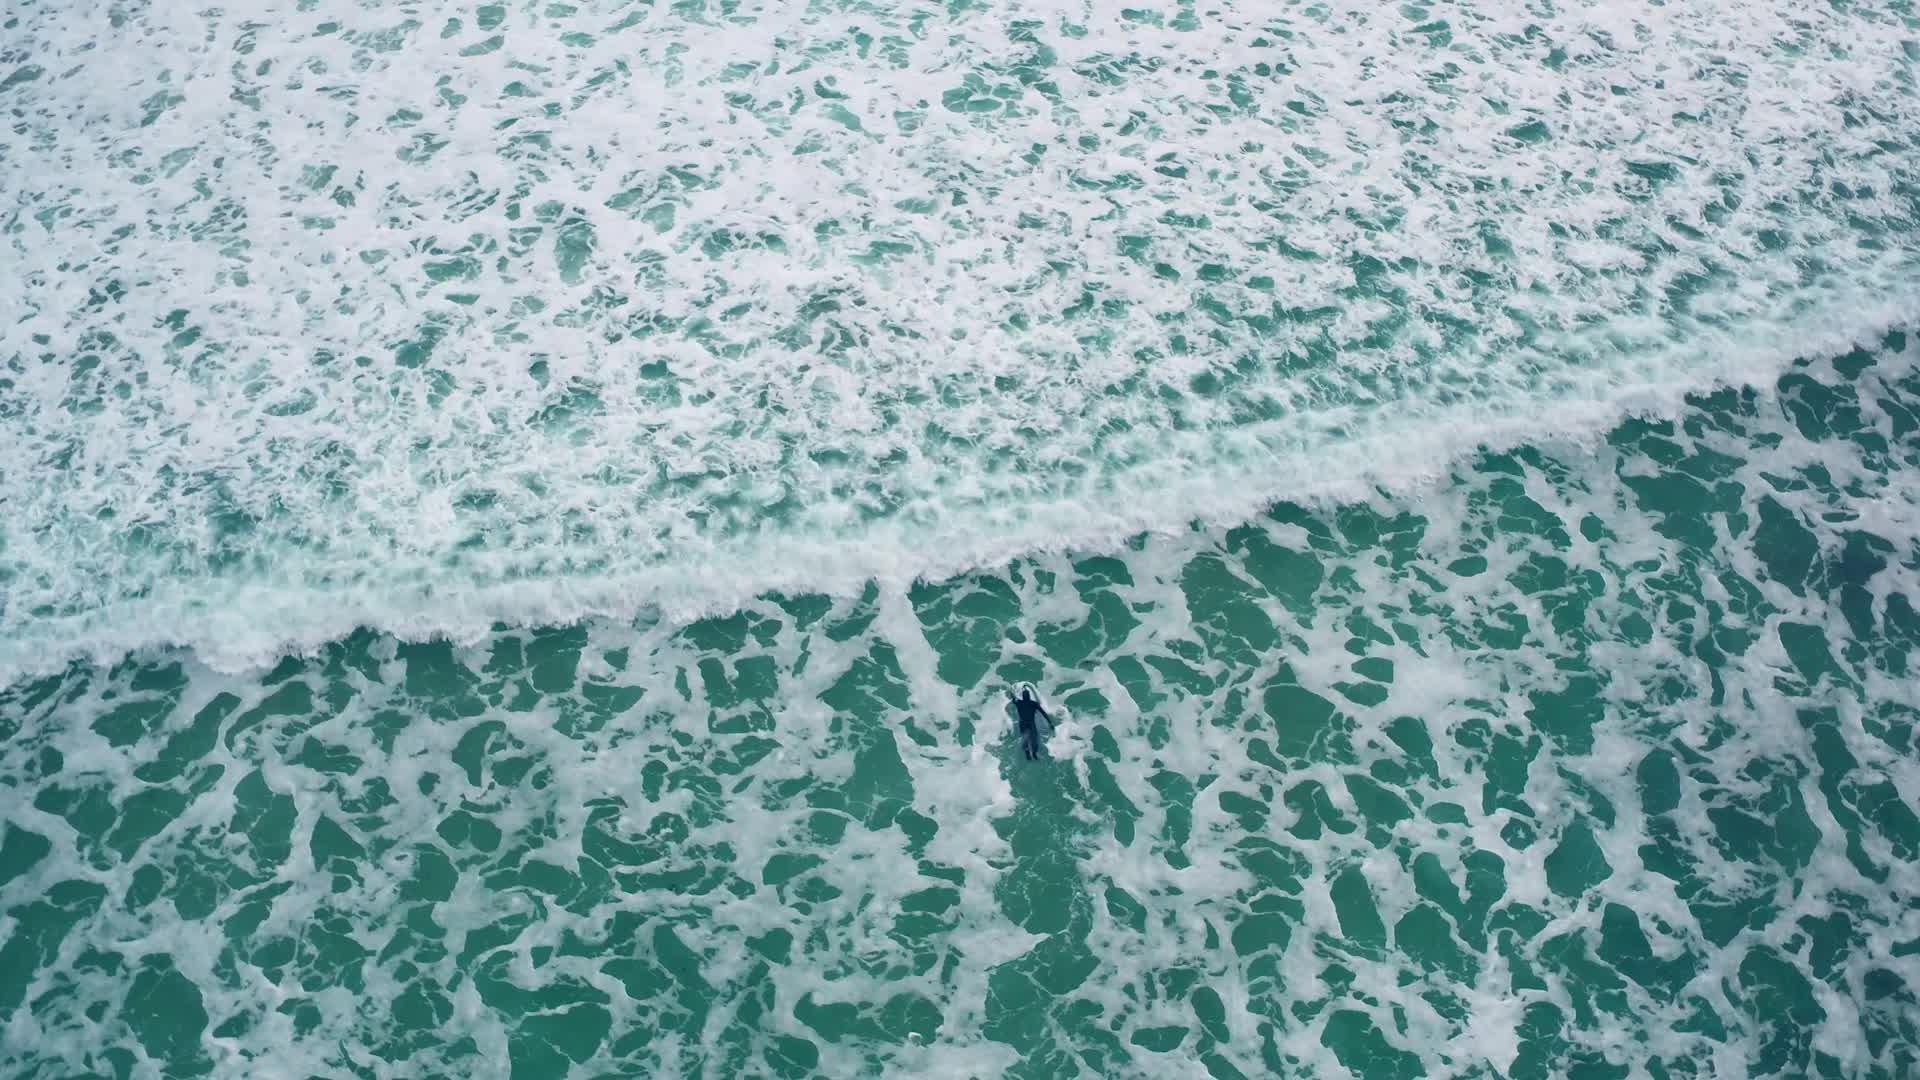 Mick Fanning: Surfing under Northern Lights *video*